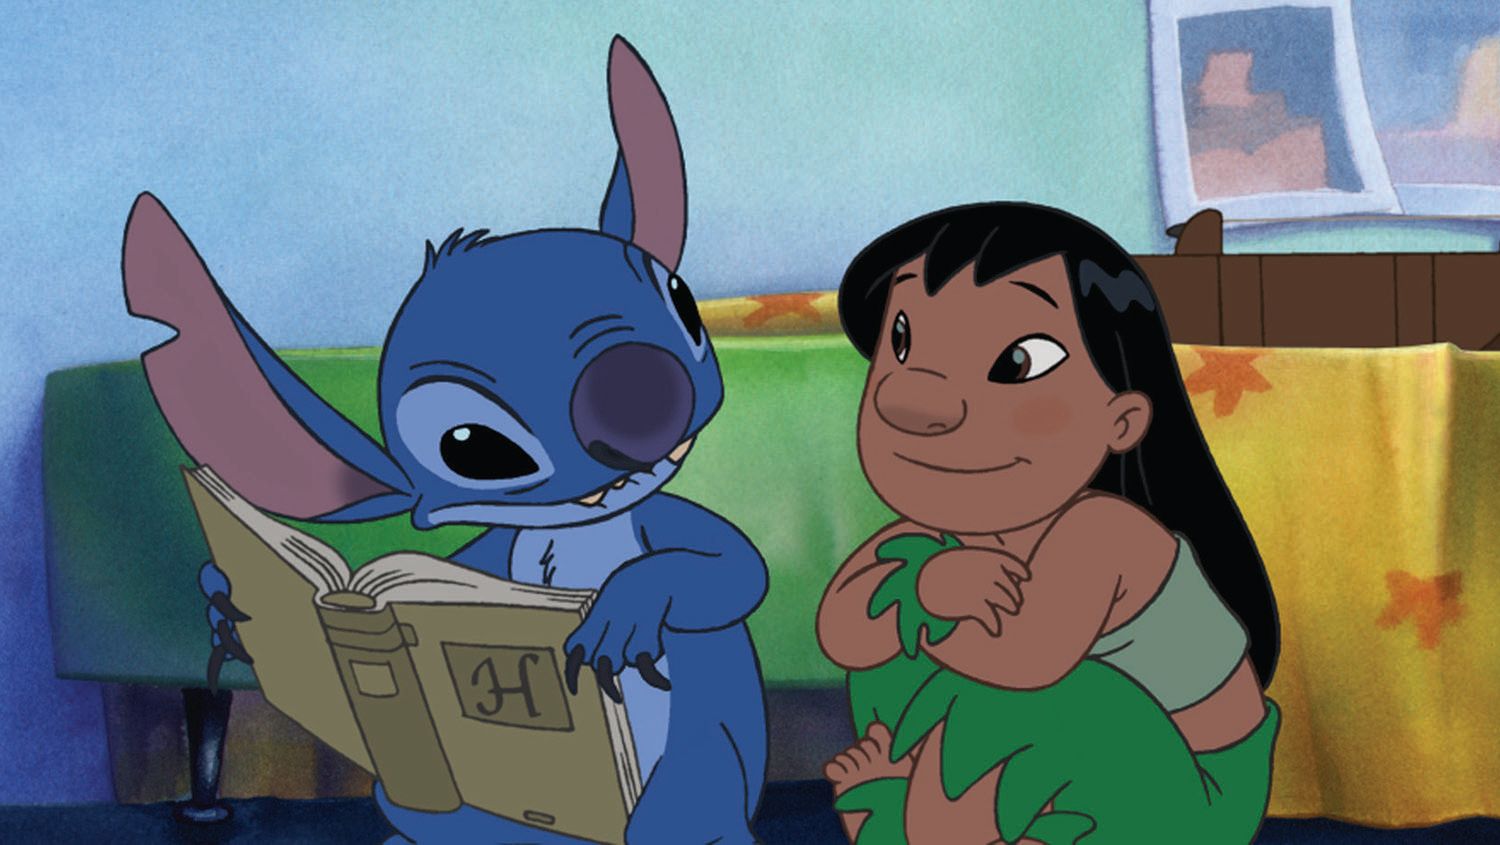 Disney's Live-Action Lilo & Stitch Reboot: Cast and Plot